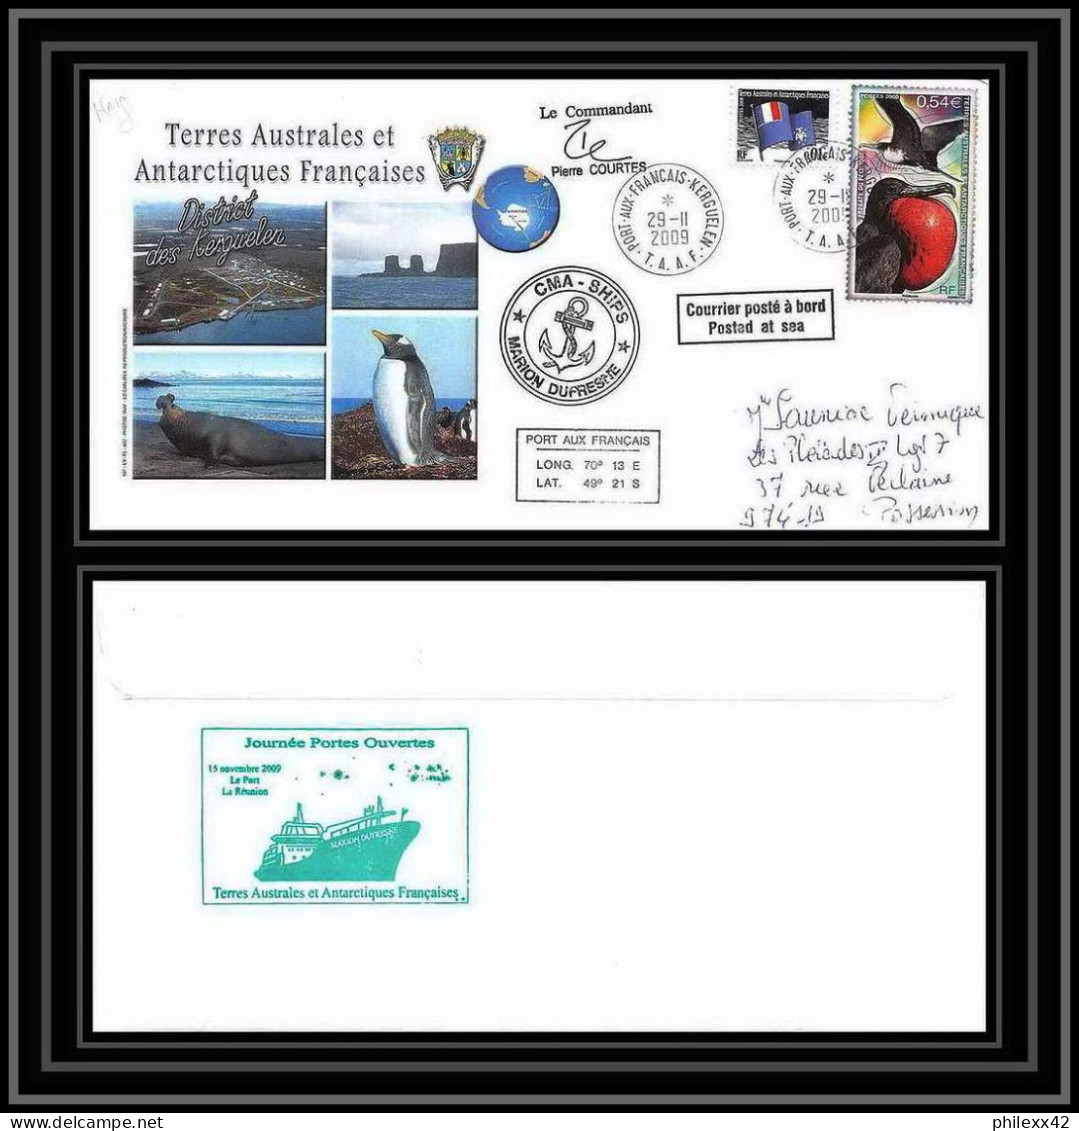 2959 Terres Australes TAAF Lettre Dufresne Signé Signed Kerguelen Portes Ouvertes 29/11/2009 N°517 Fregate Bird - Covers & Documents